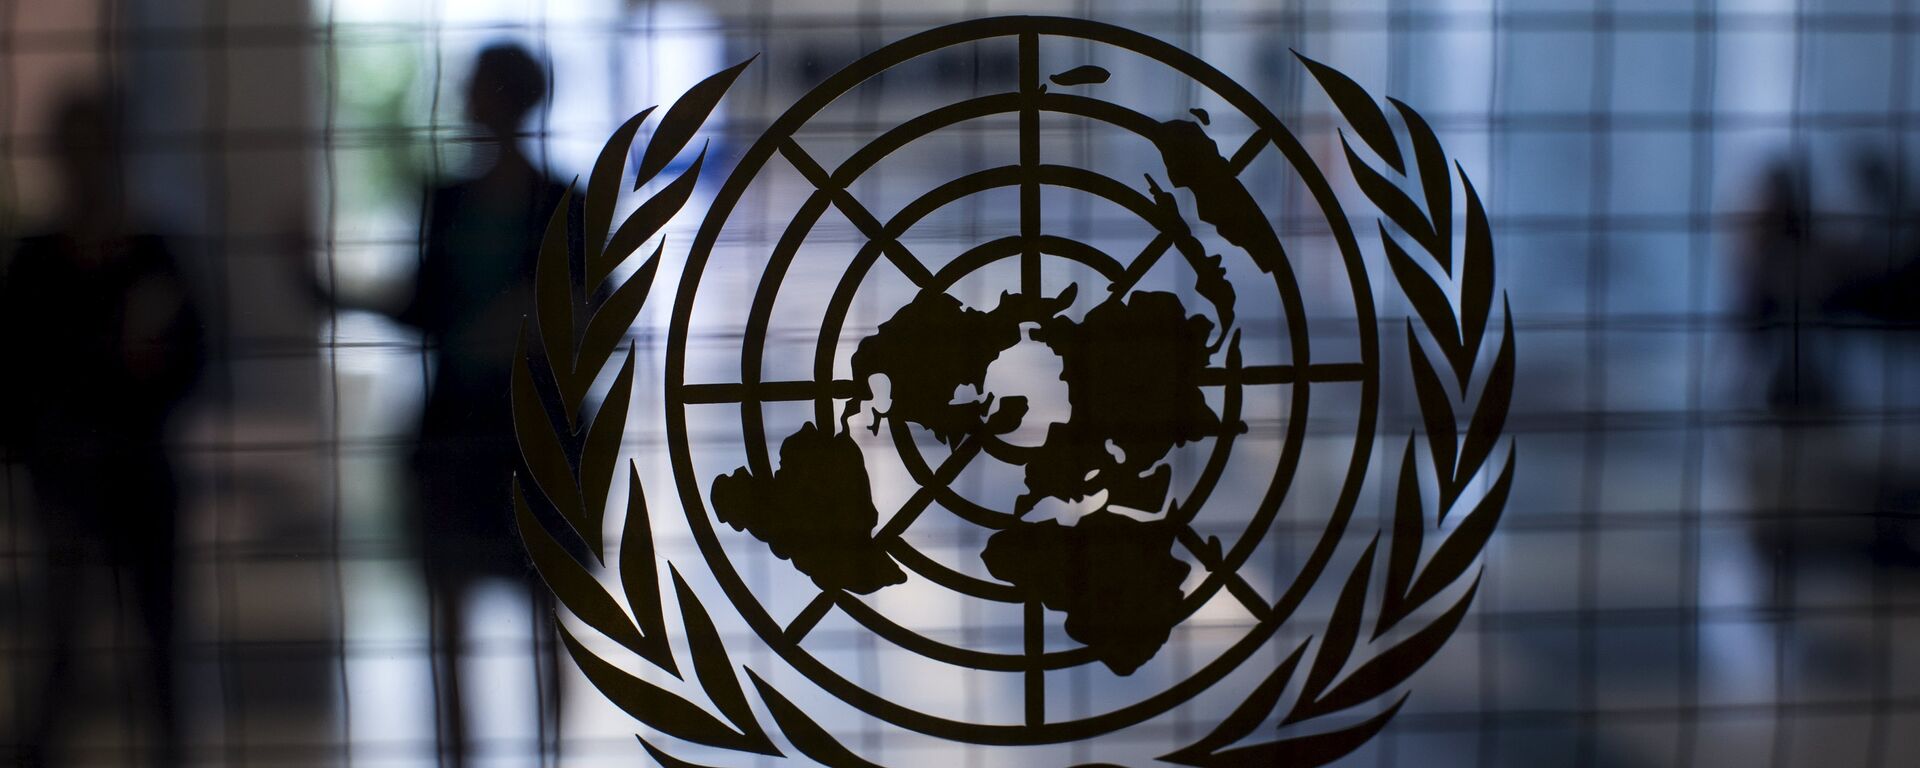 Logo de la ONU - Sputnik Mundo, 1920, 15.09.2021